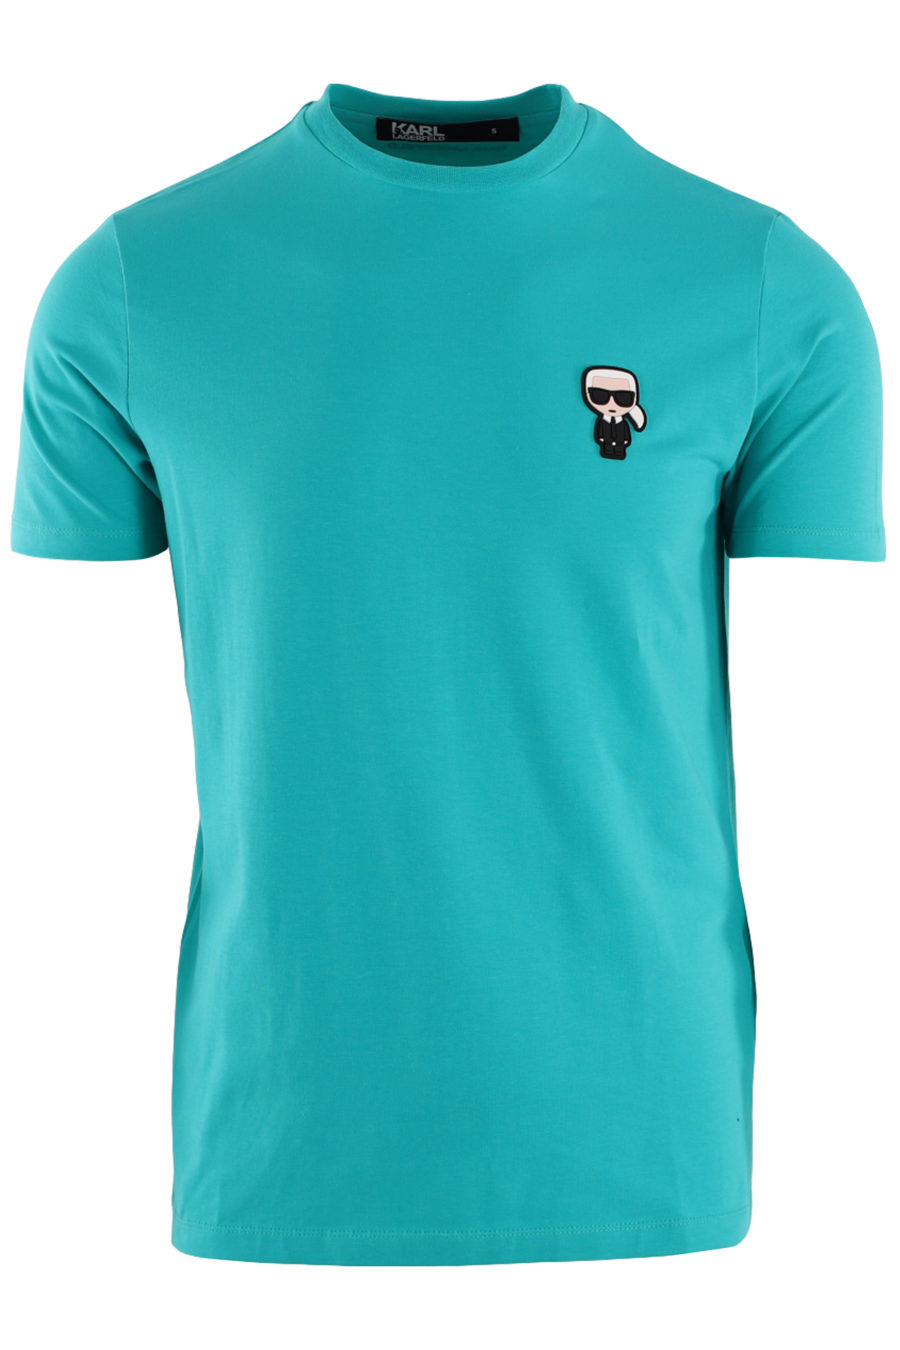 Camiseta color turquesa con logo de goma pequeño - IMG 8755